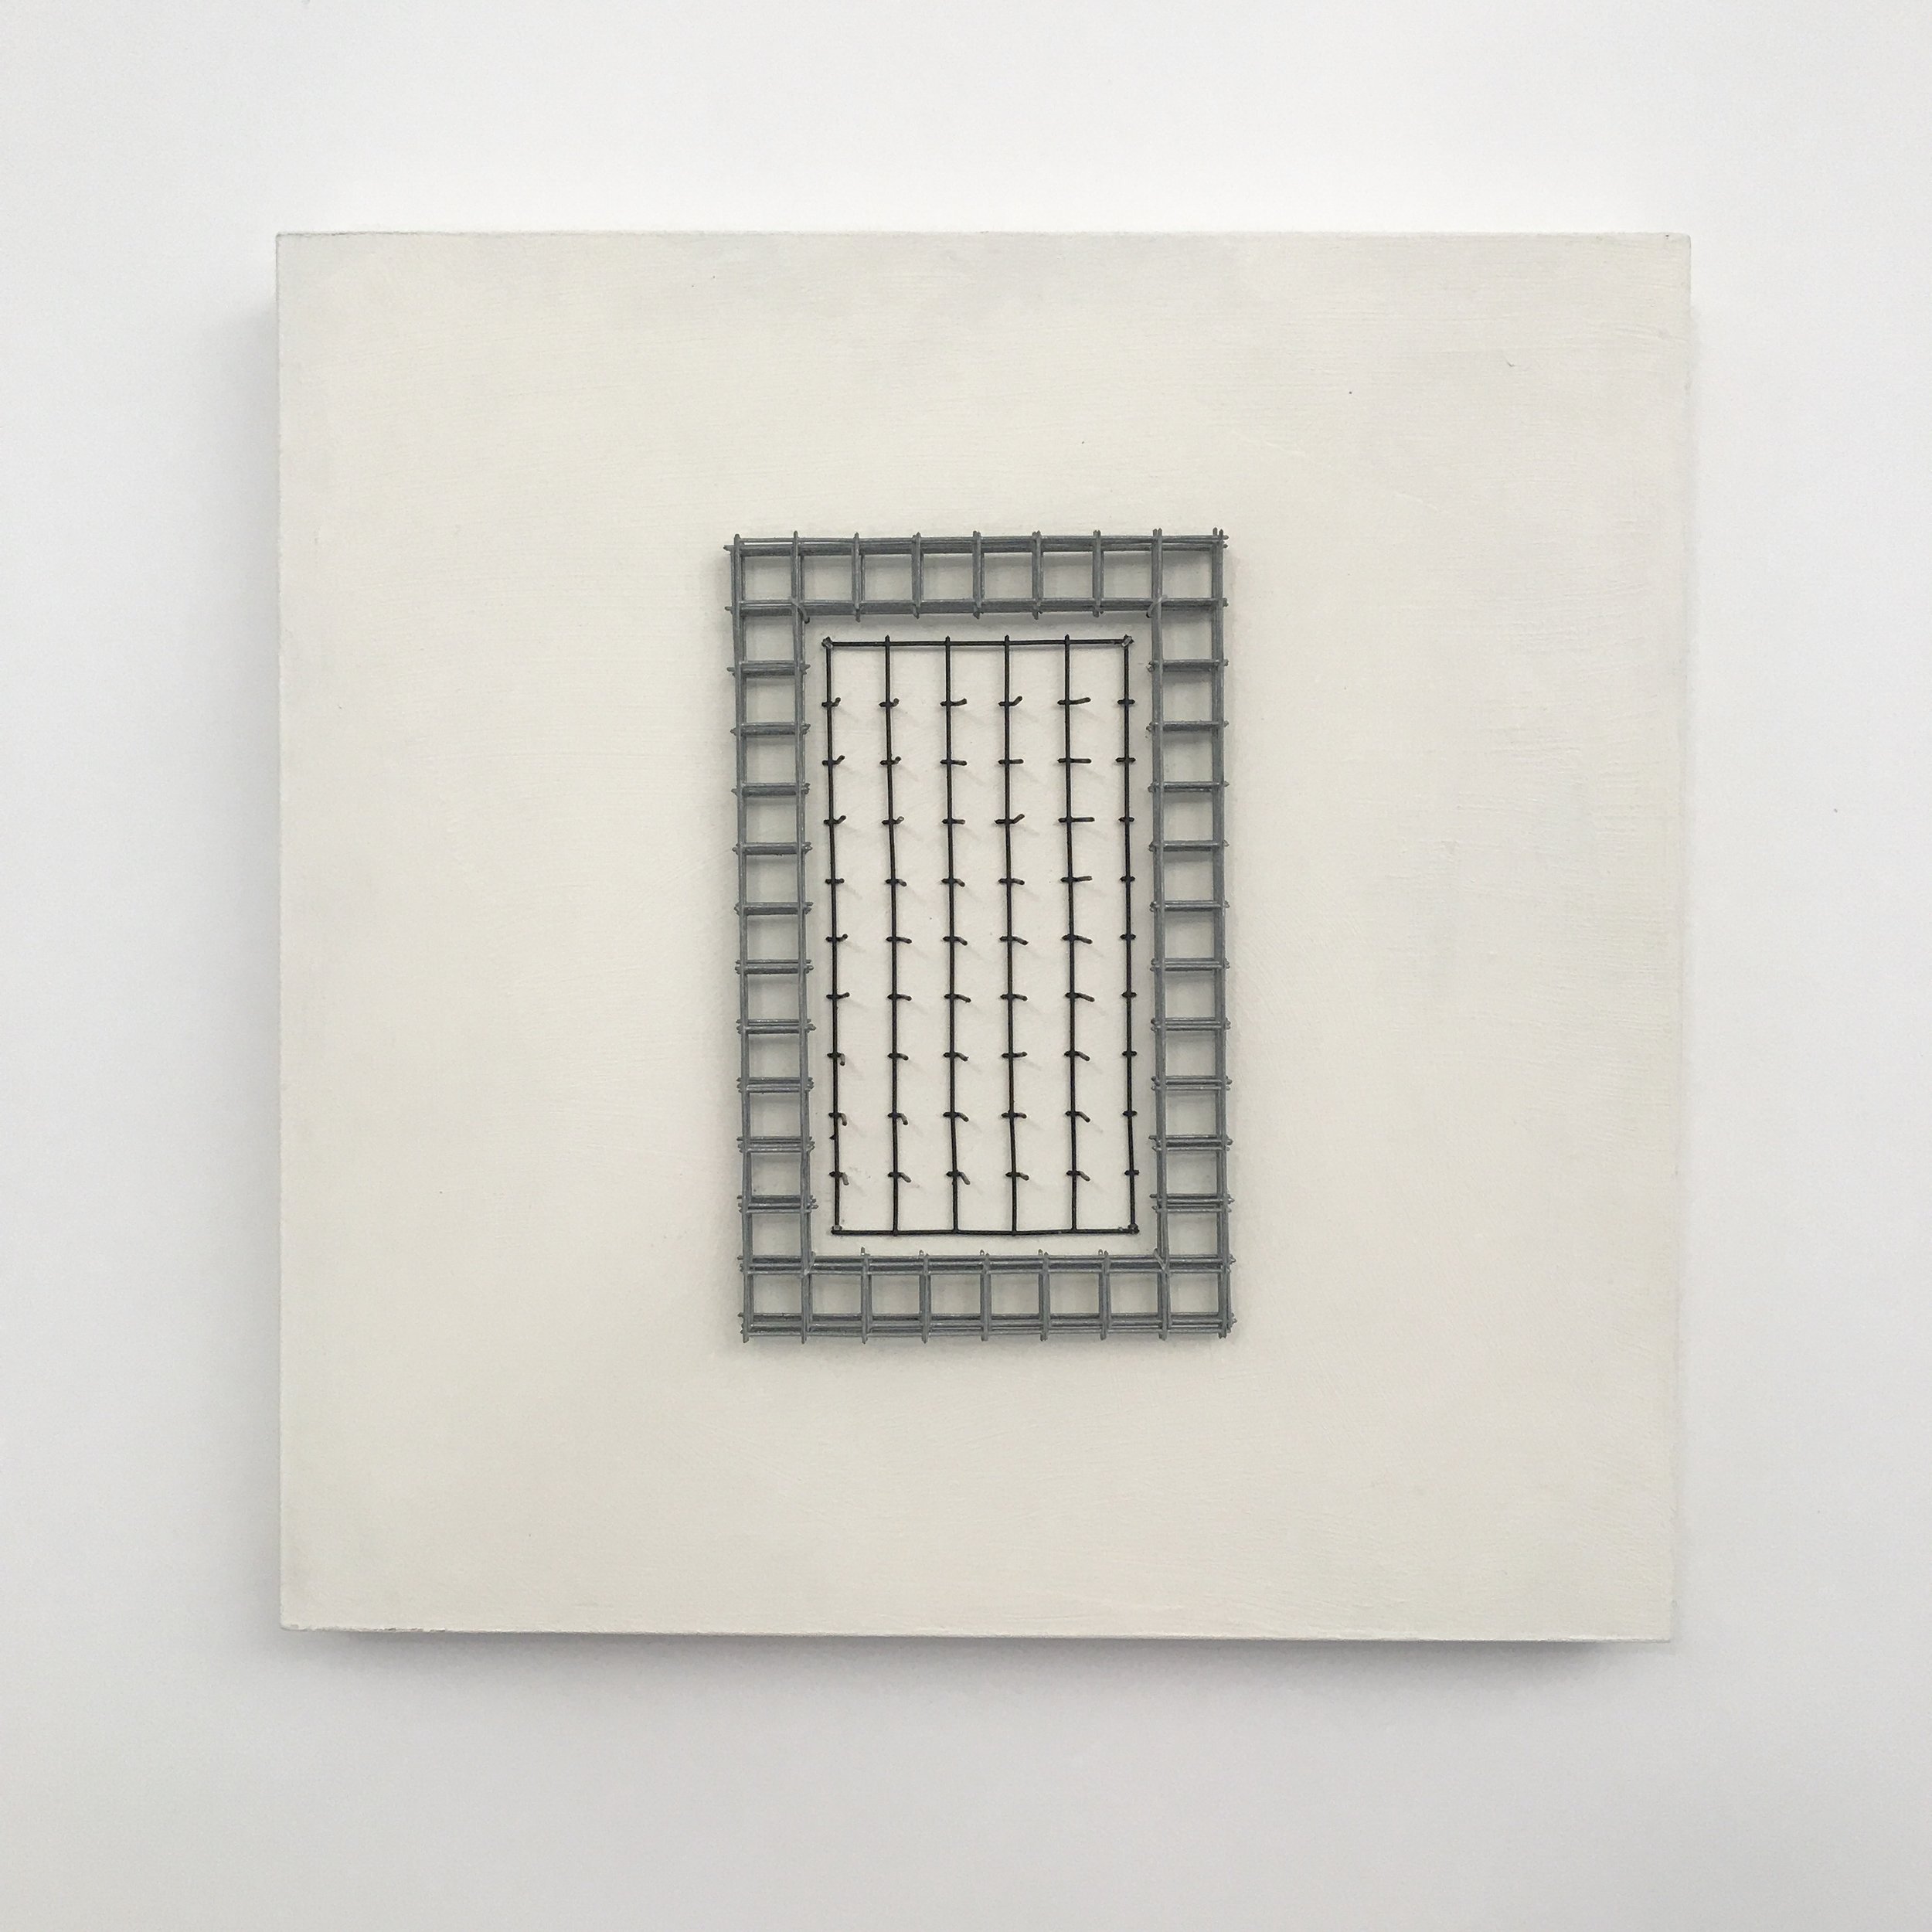  Doug Cross,  Meditation Square #3 , Wire mesh and wood, 12”x12”x3” 